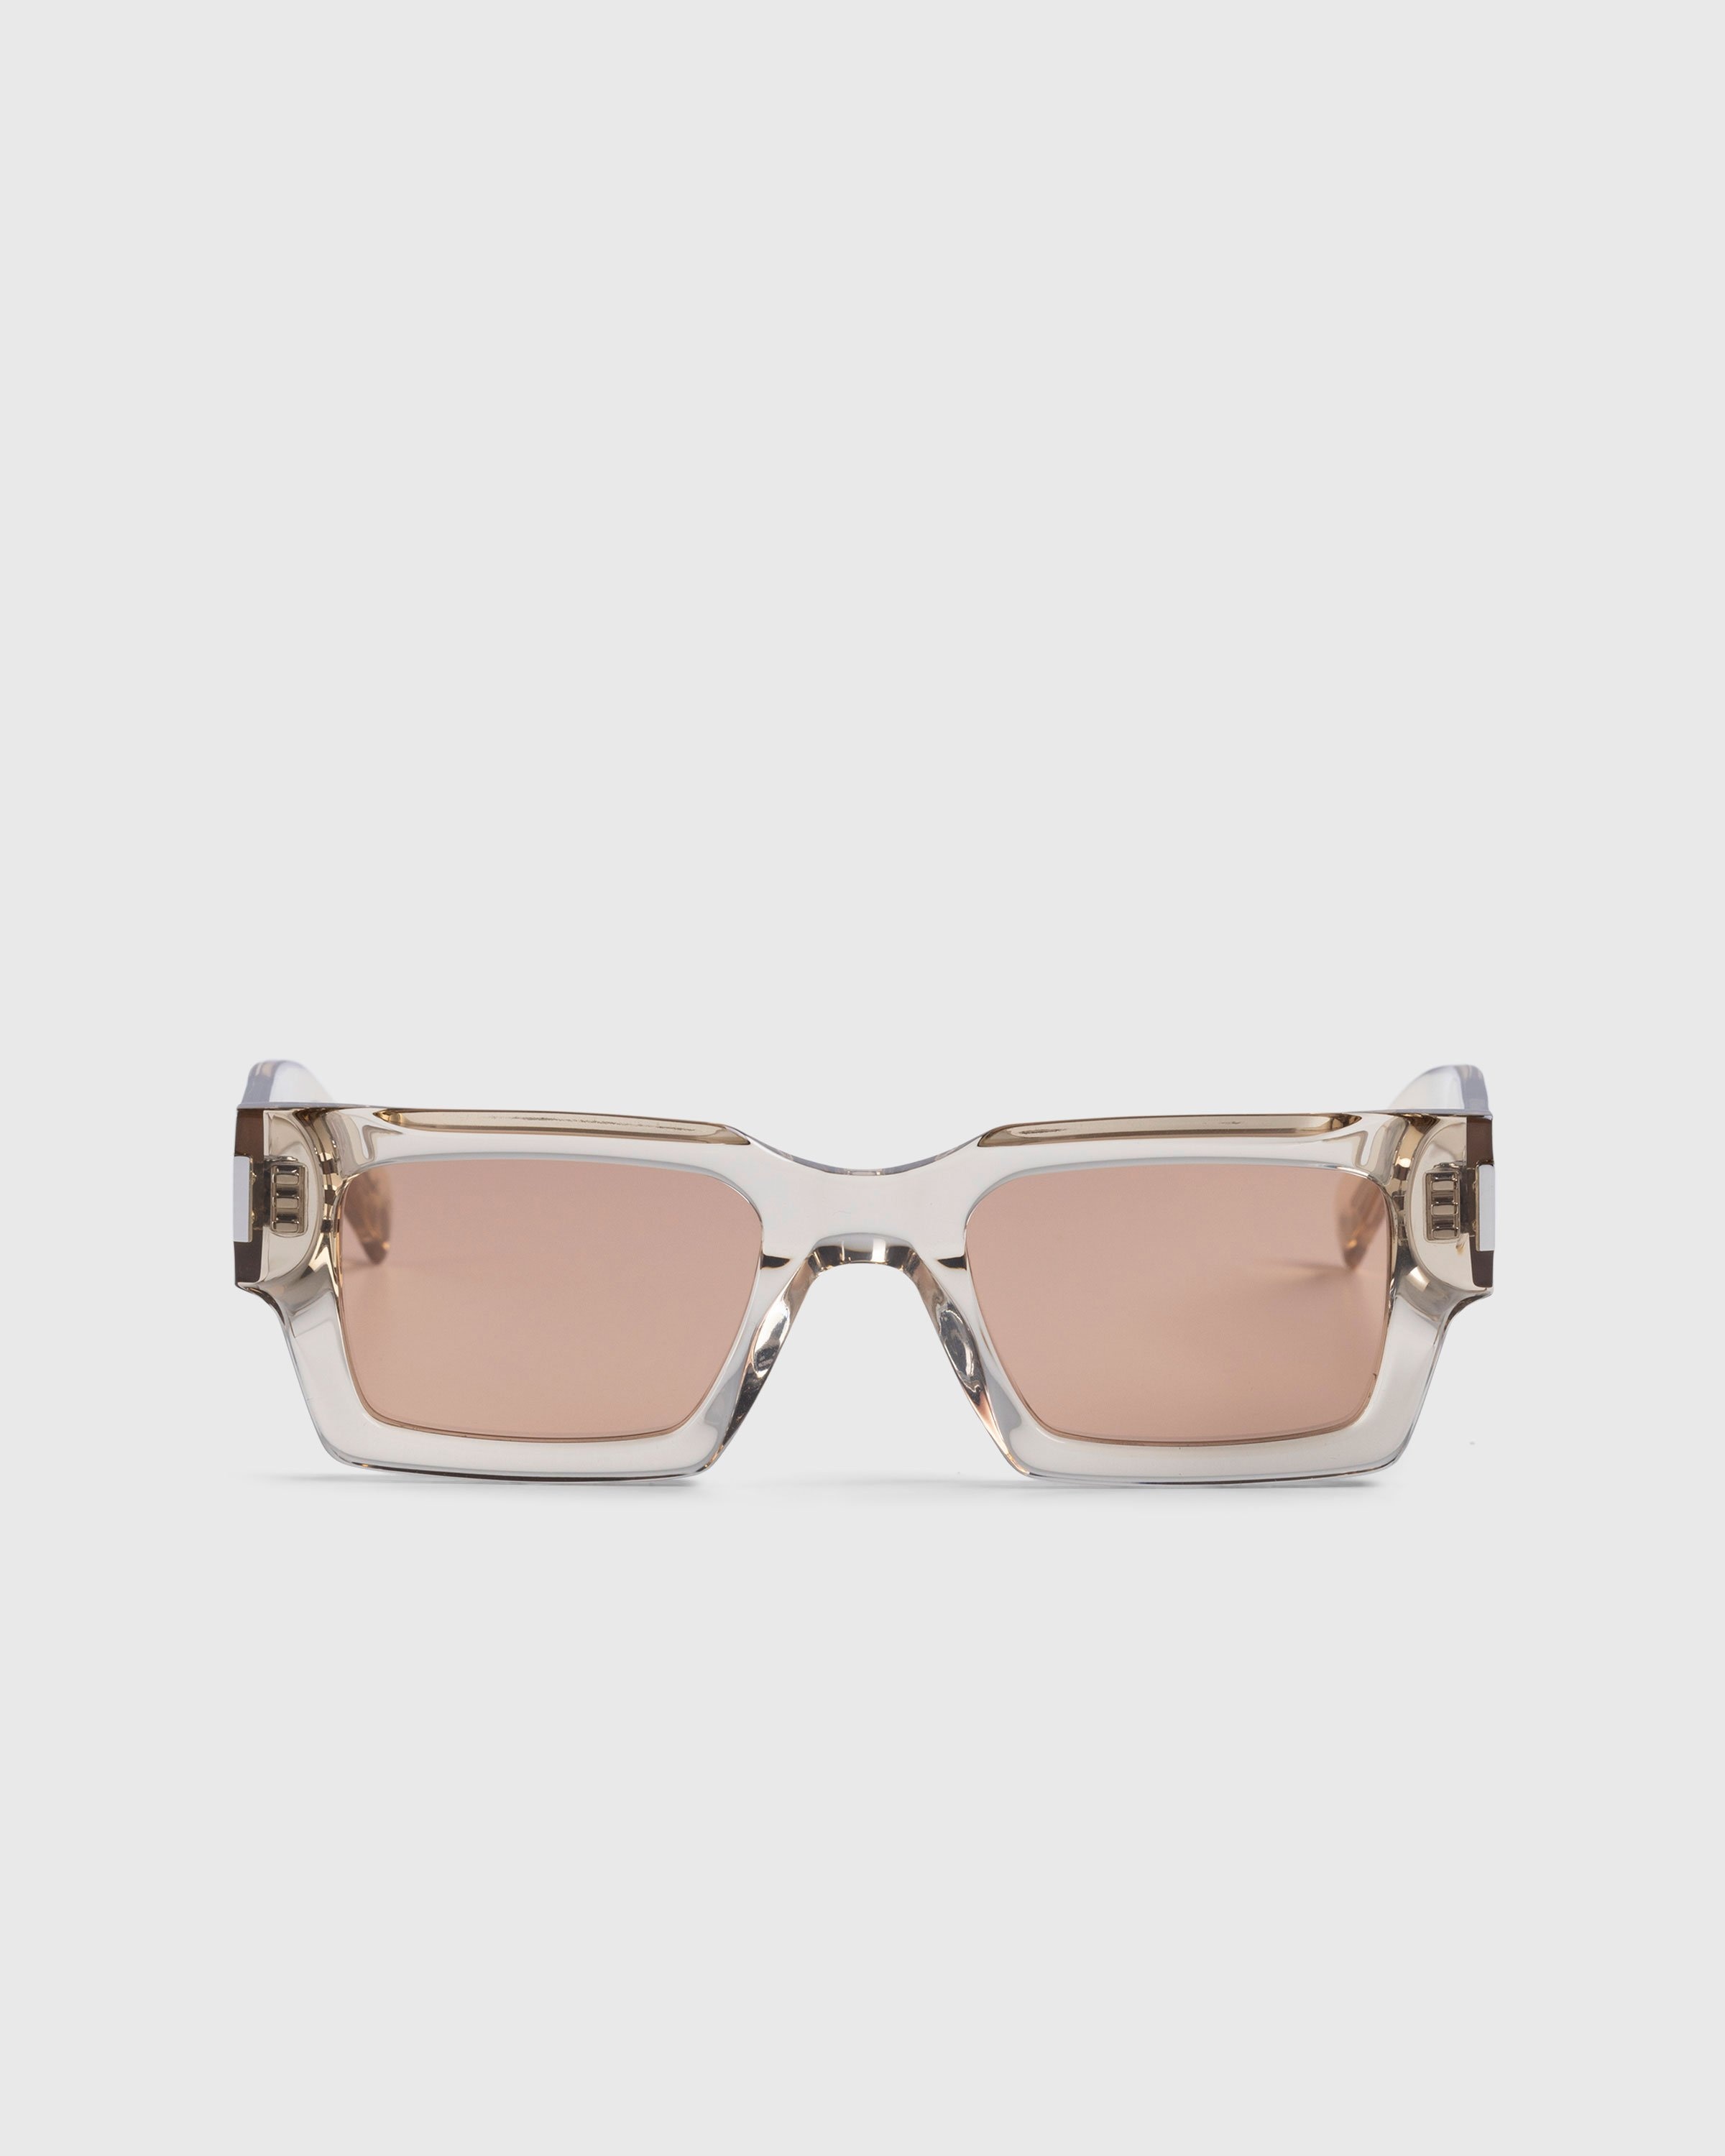 Saint Laurent – SL 572 Square Frame Sunglasses Yellow/Brown - Eyewear - Multi - Image 1